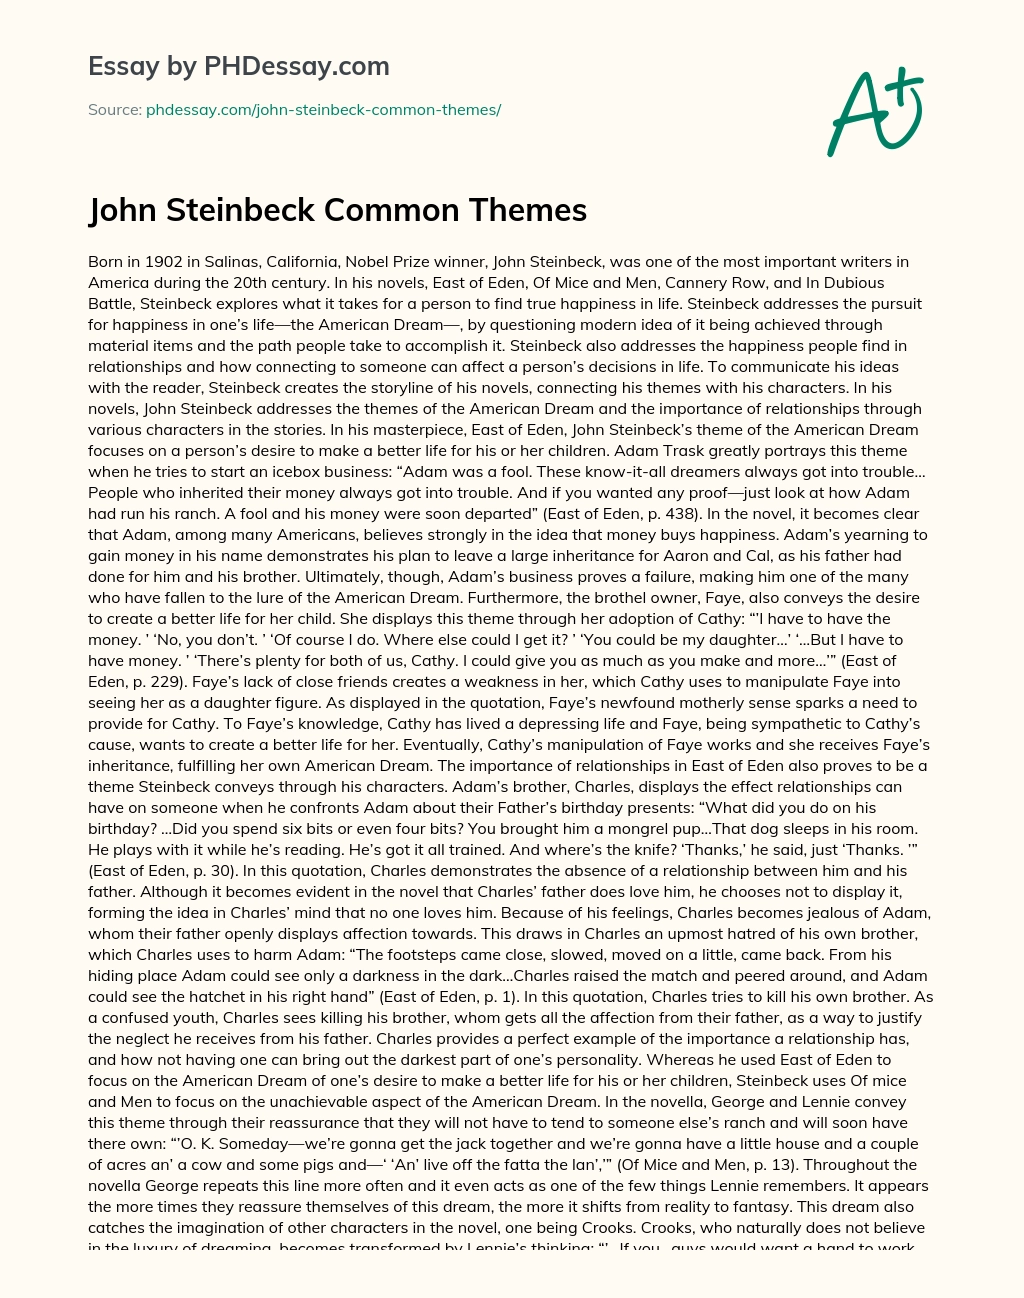 John Steinbeck Common Themes essay